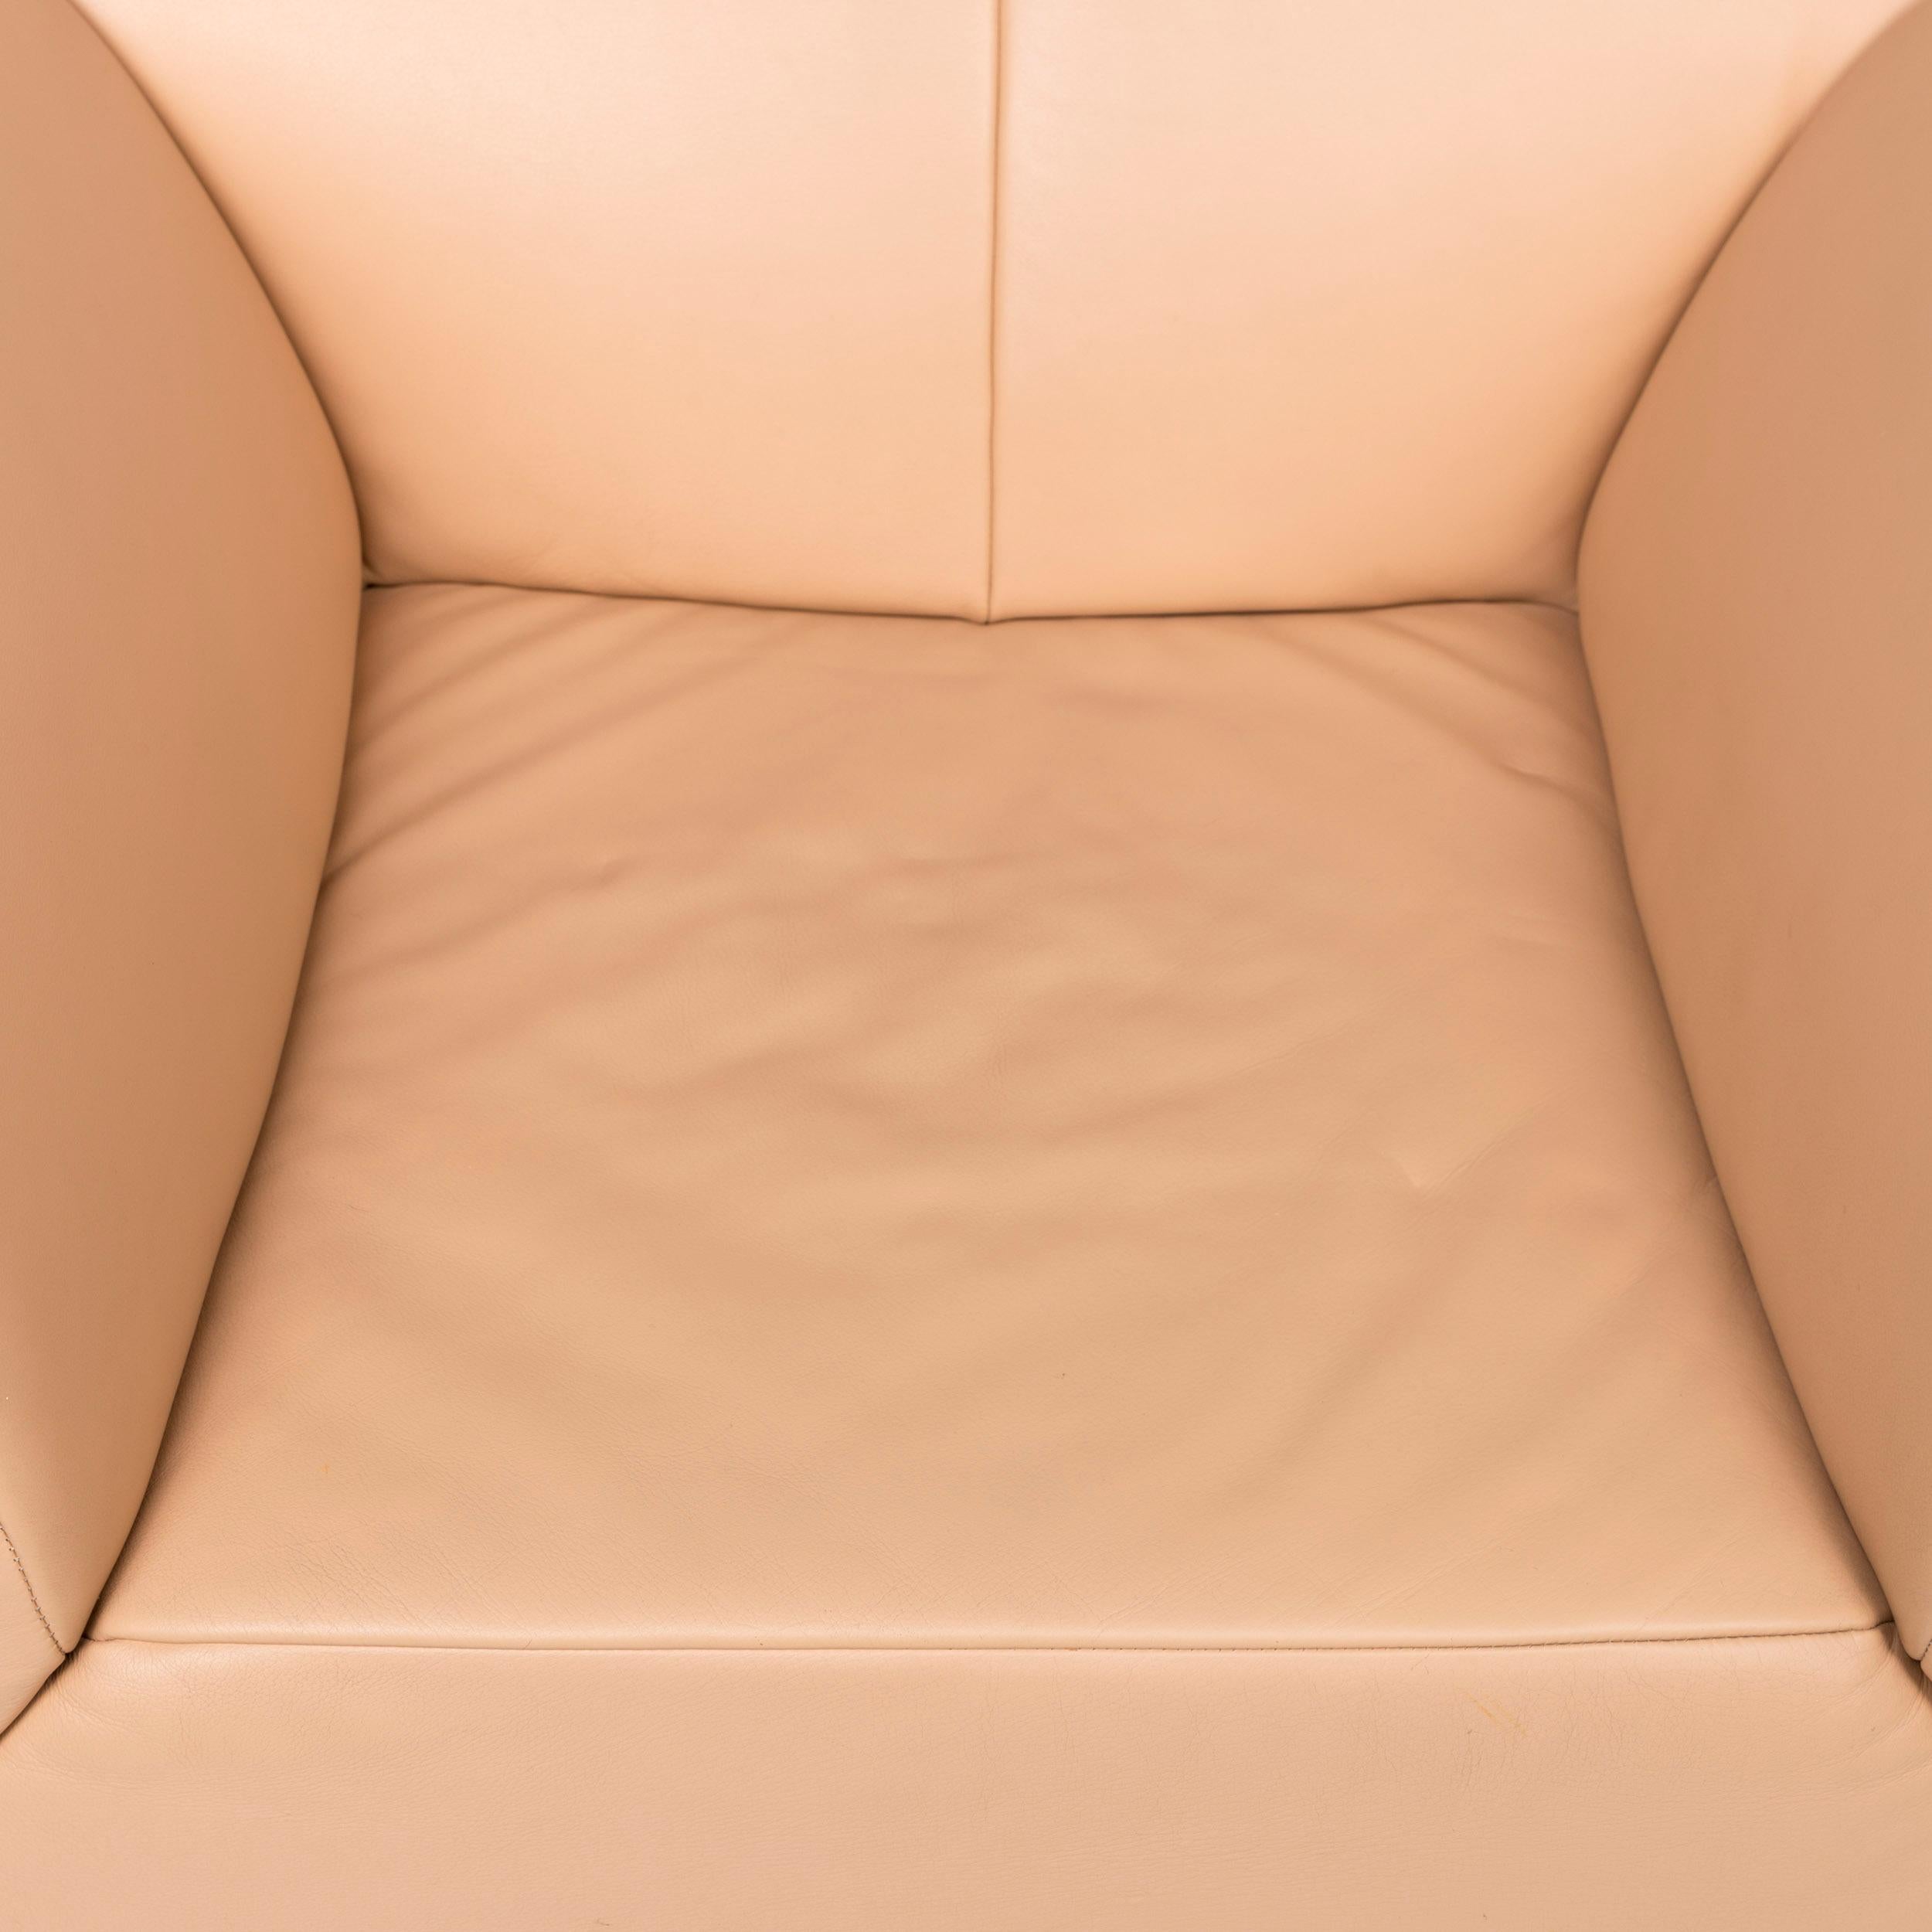 JORI Leather Sofa Set Beige Three-Seat Armchair For Sale at 1stDibs